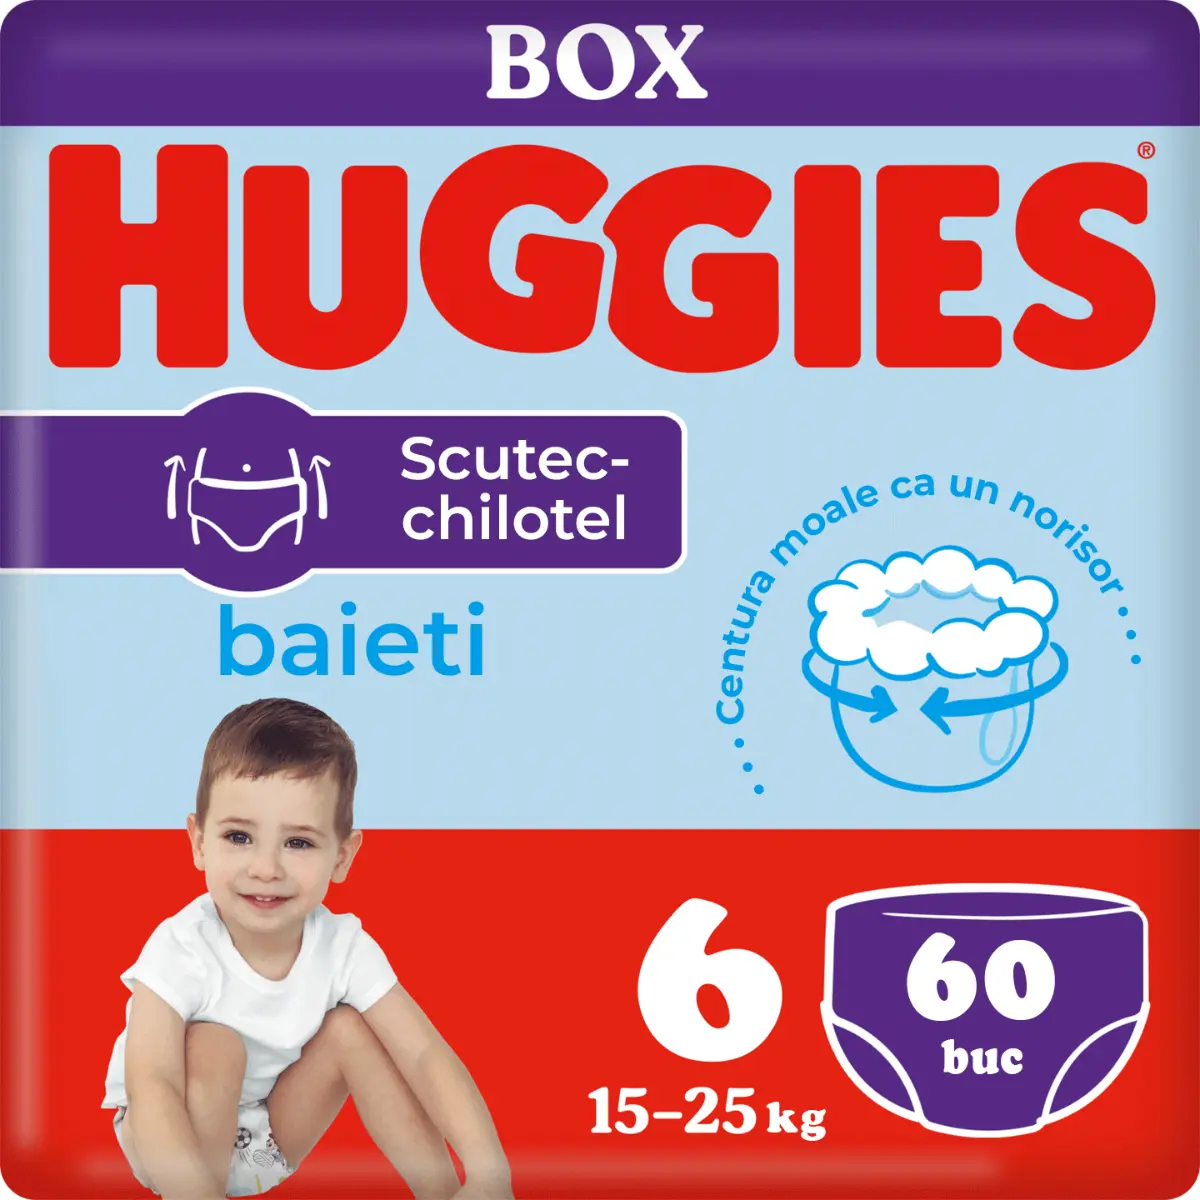 Scutece-chilotel Huggies Box 6, Boy, 15-25 kg, 60 buc